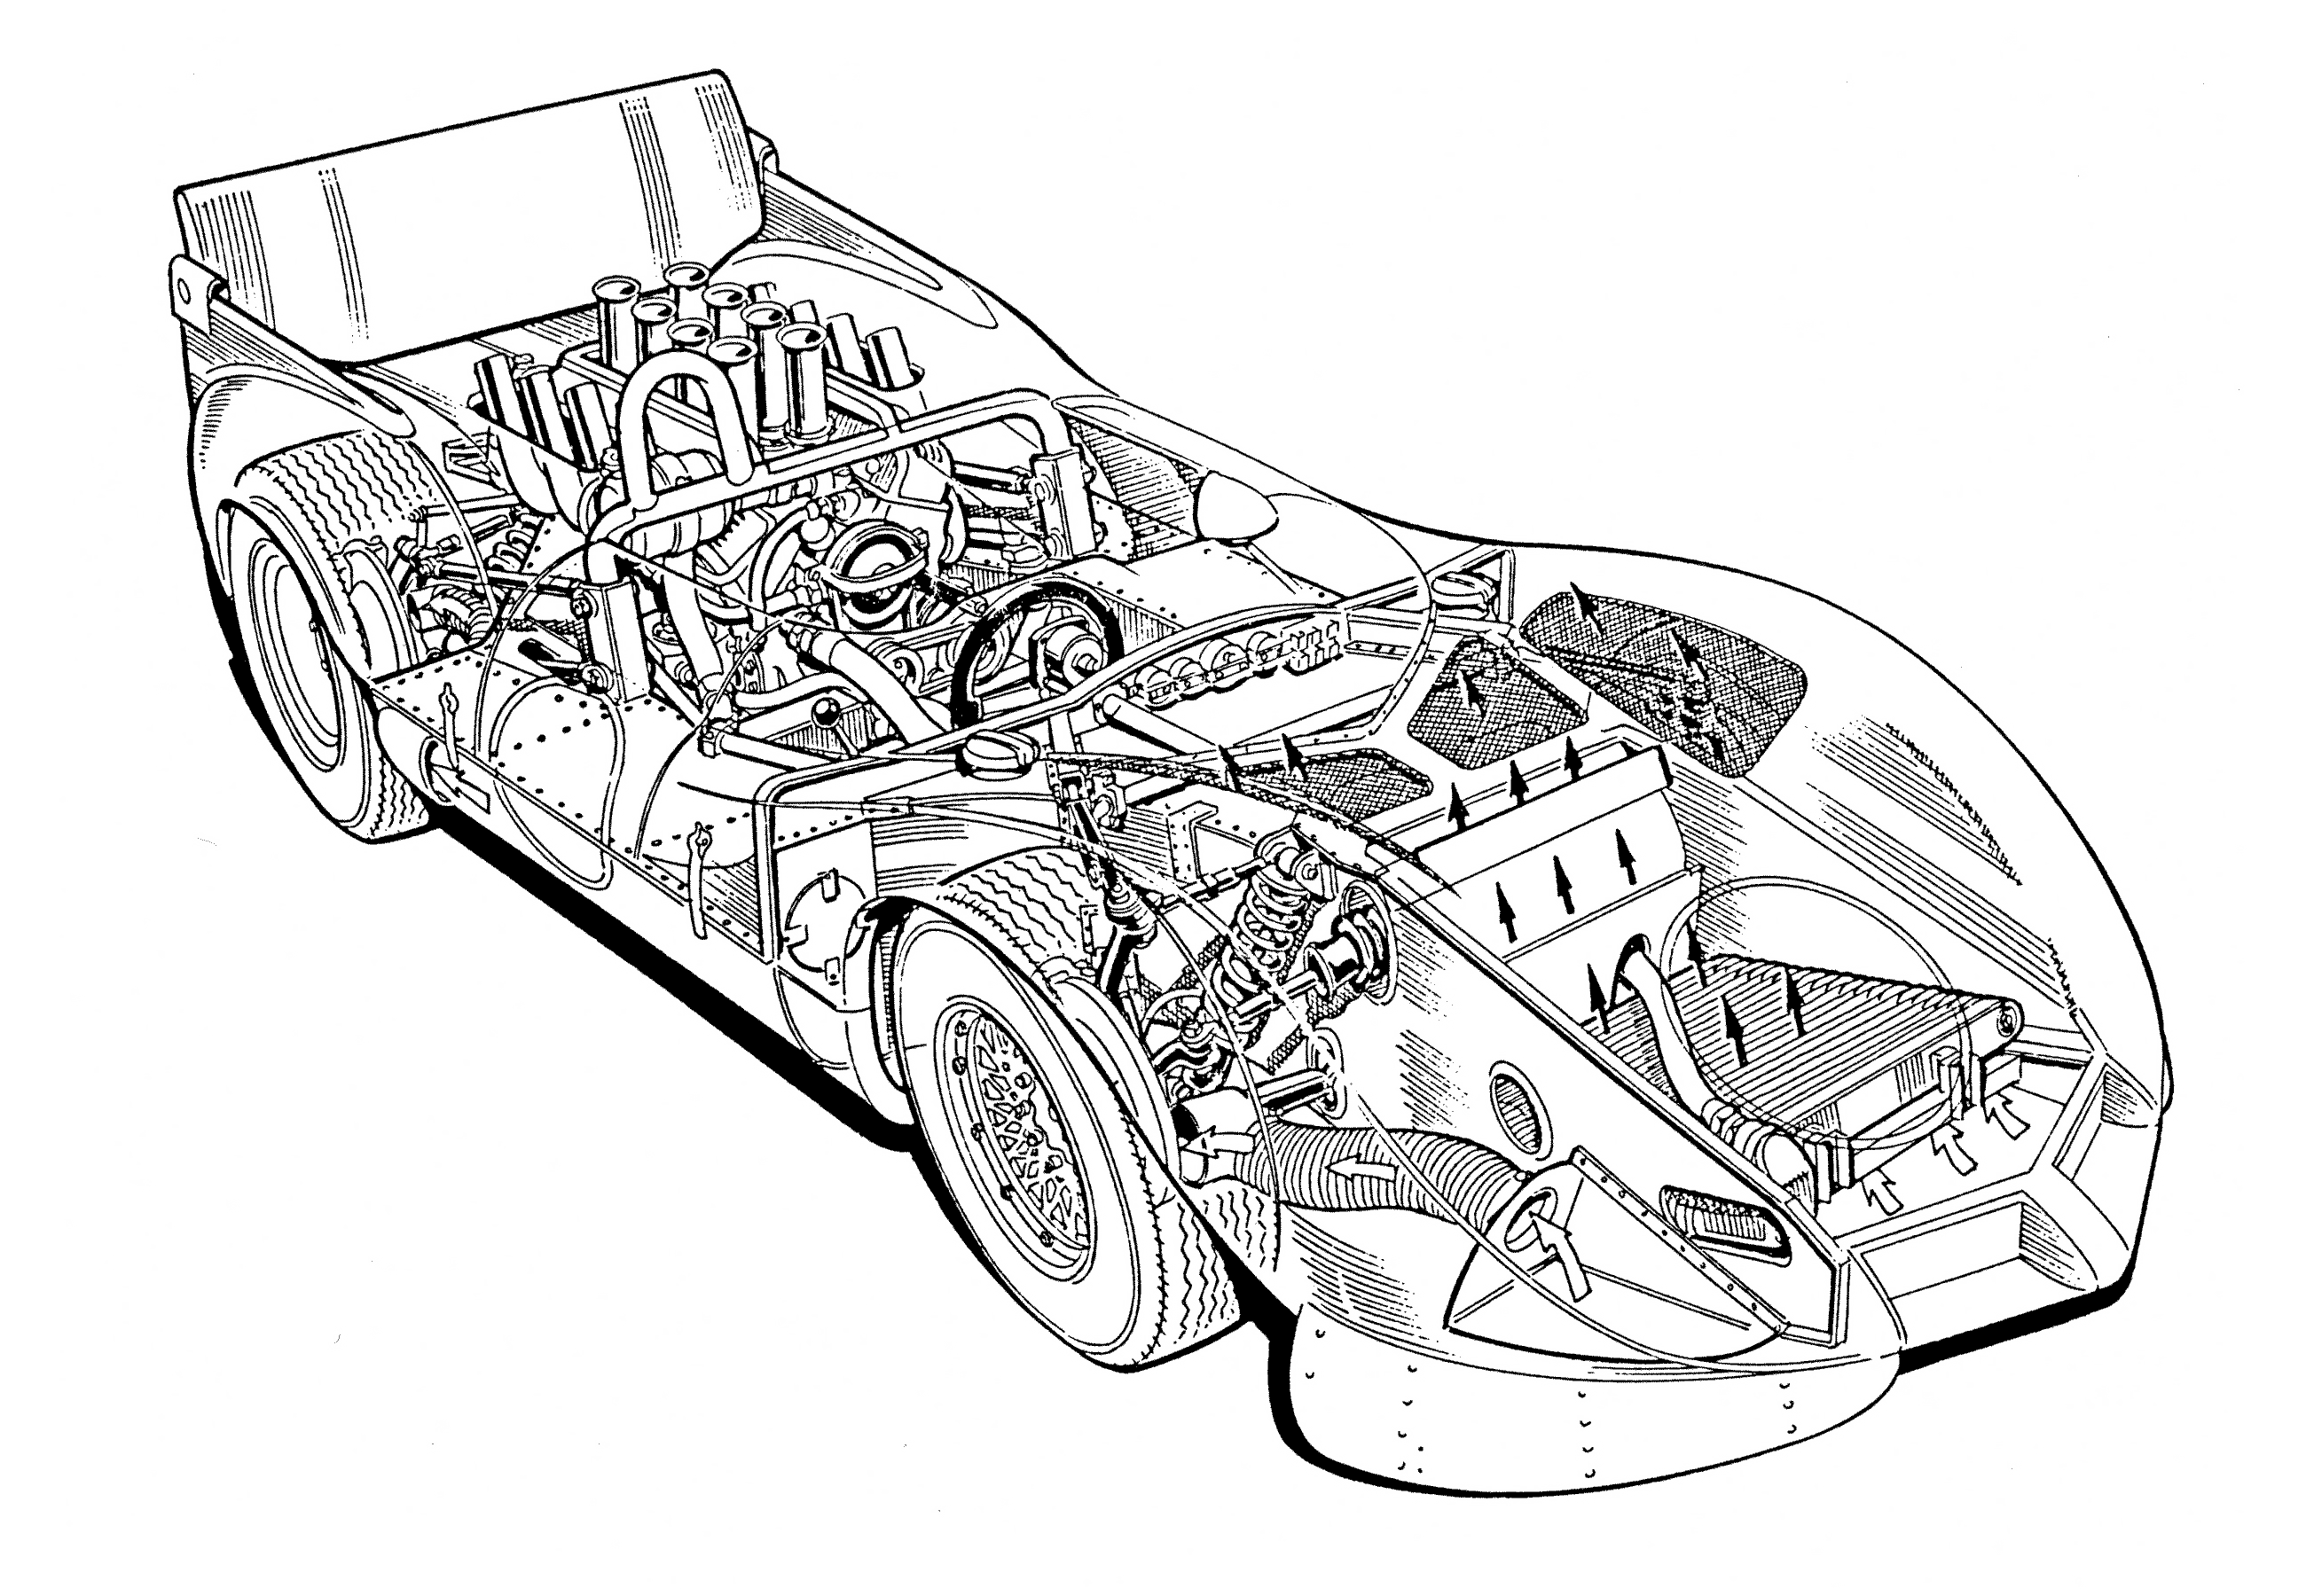 Chaparral 2C cutaway drawing